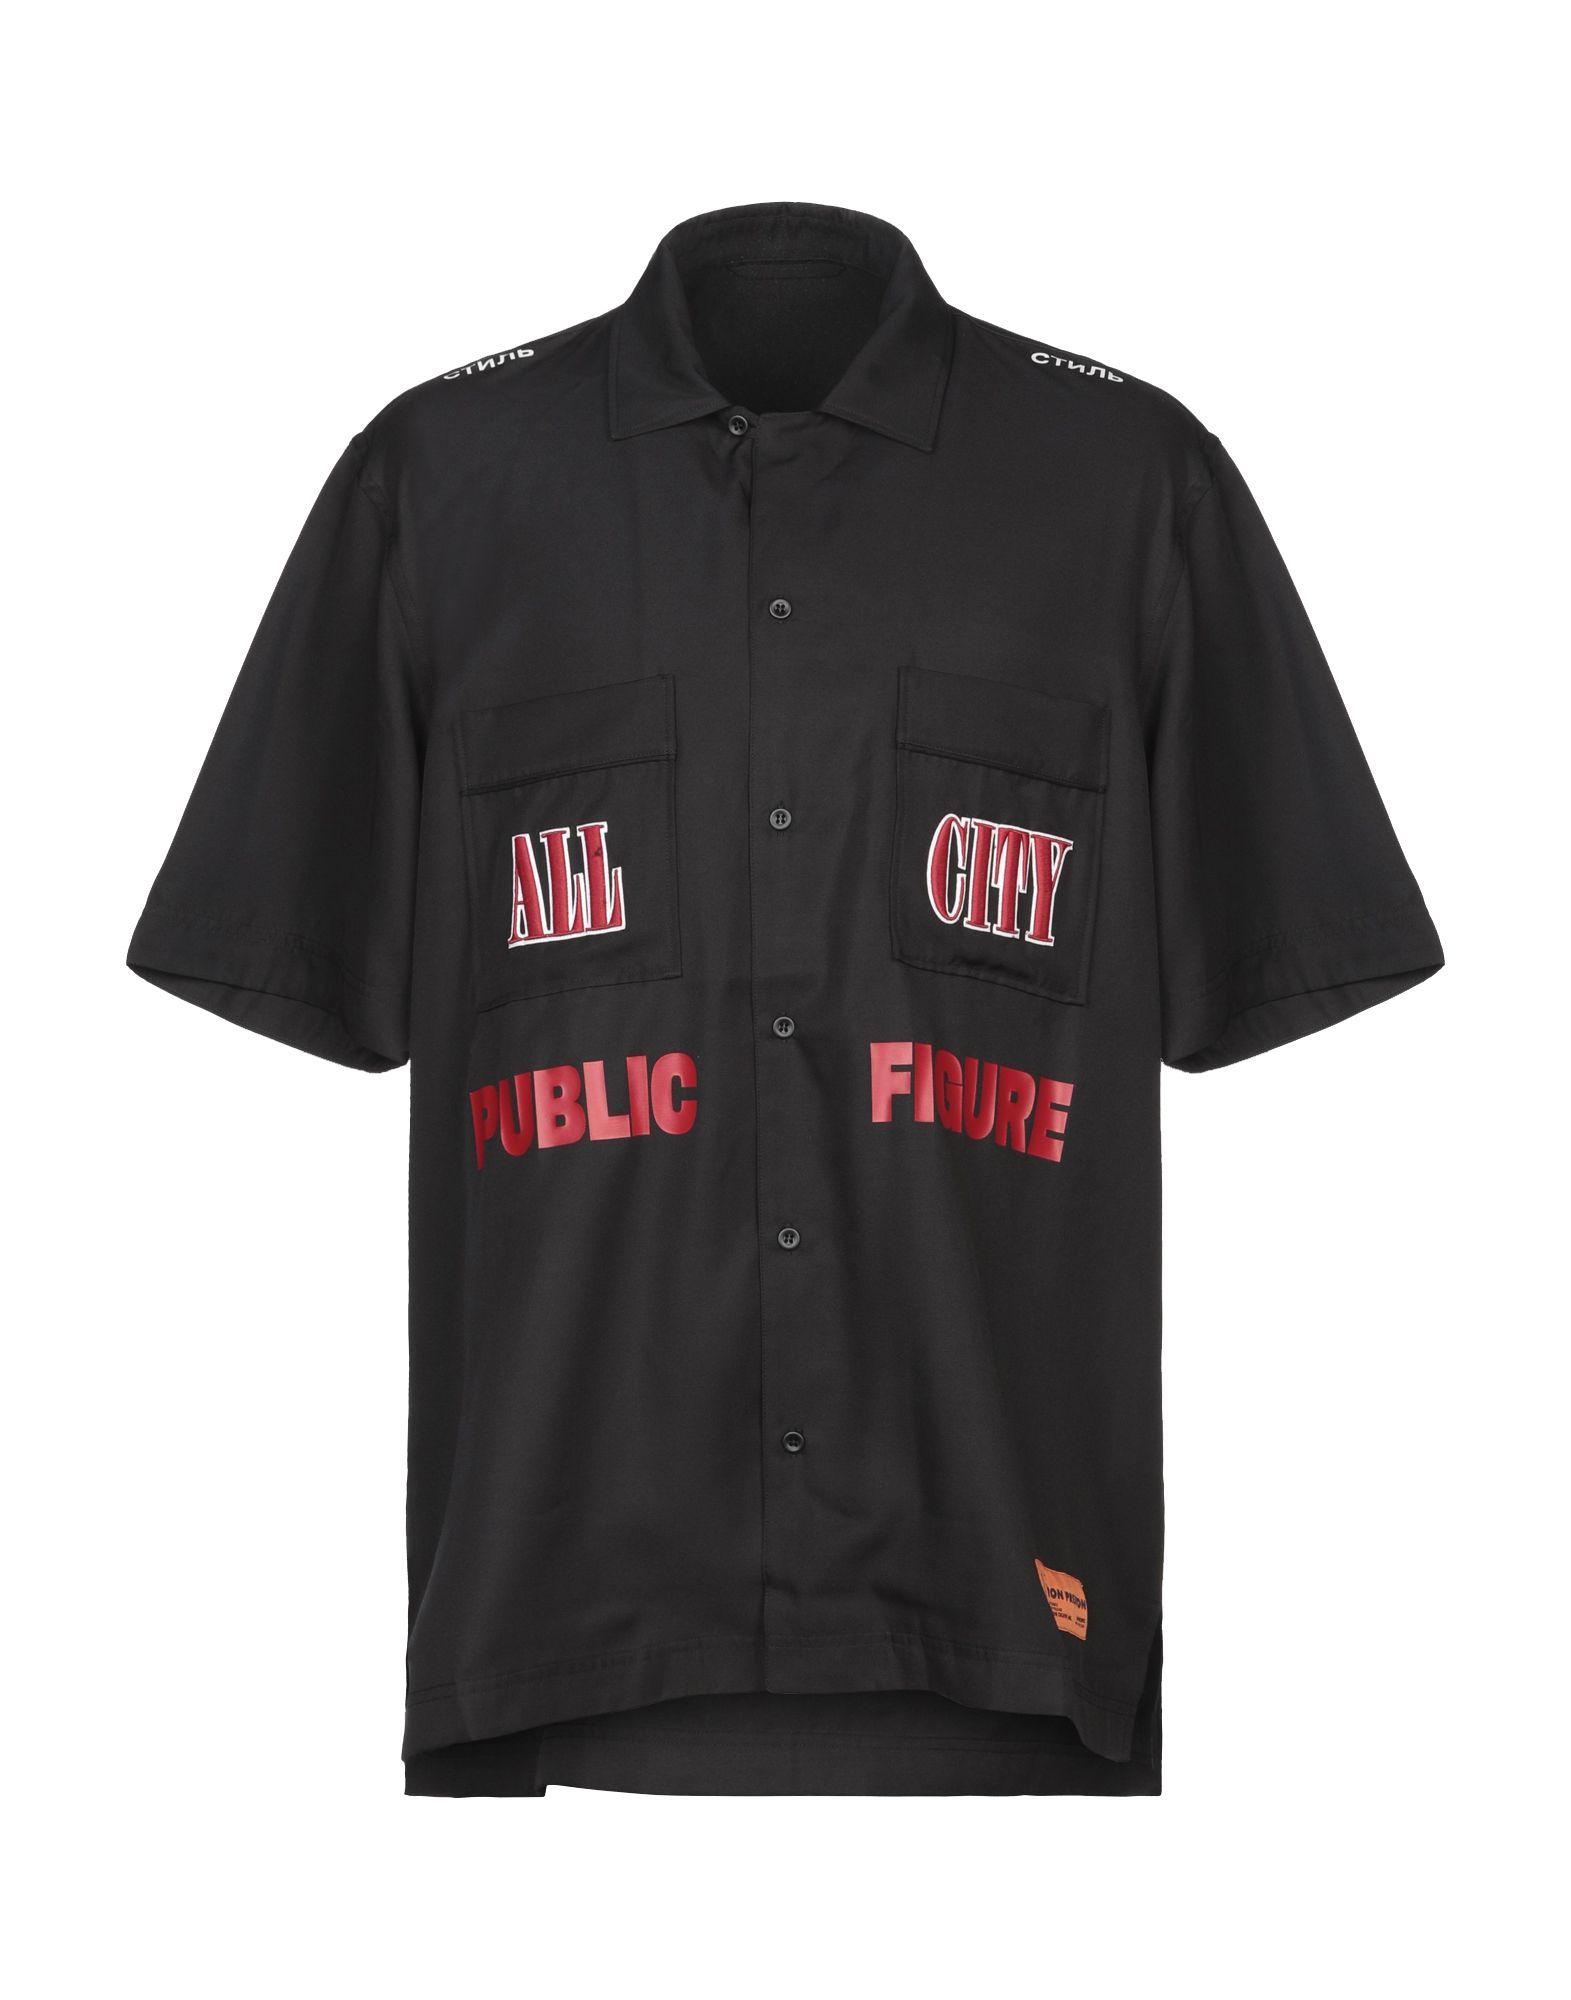 Heron Preston Synthetic Shirt in Black for Men - Lyst